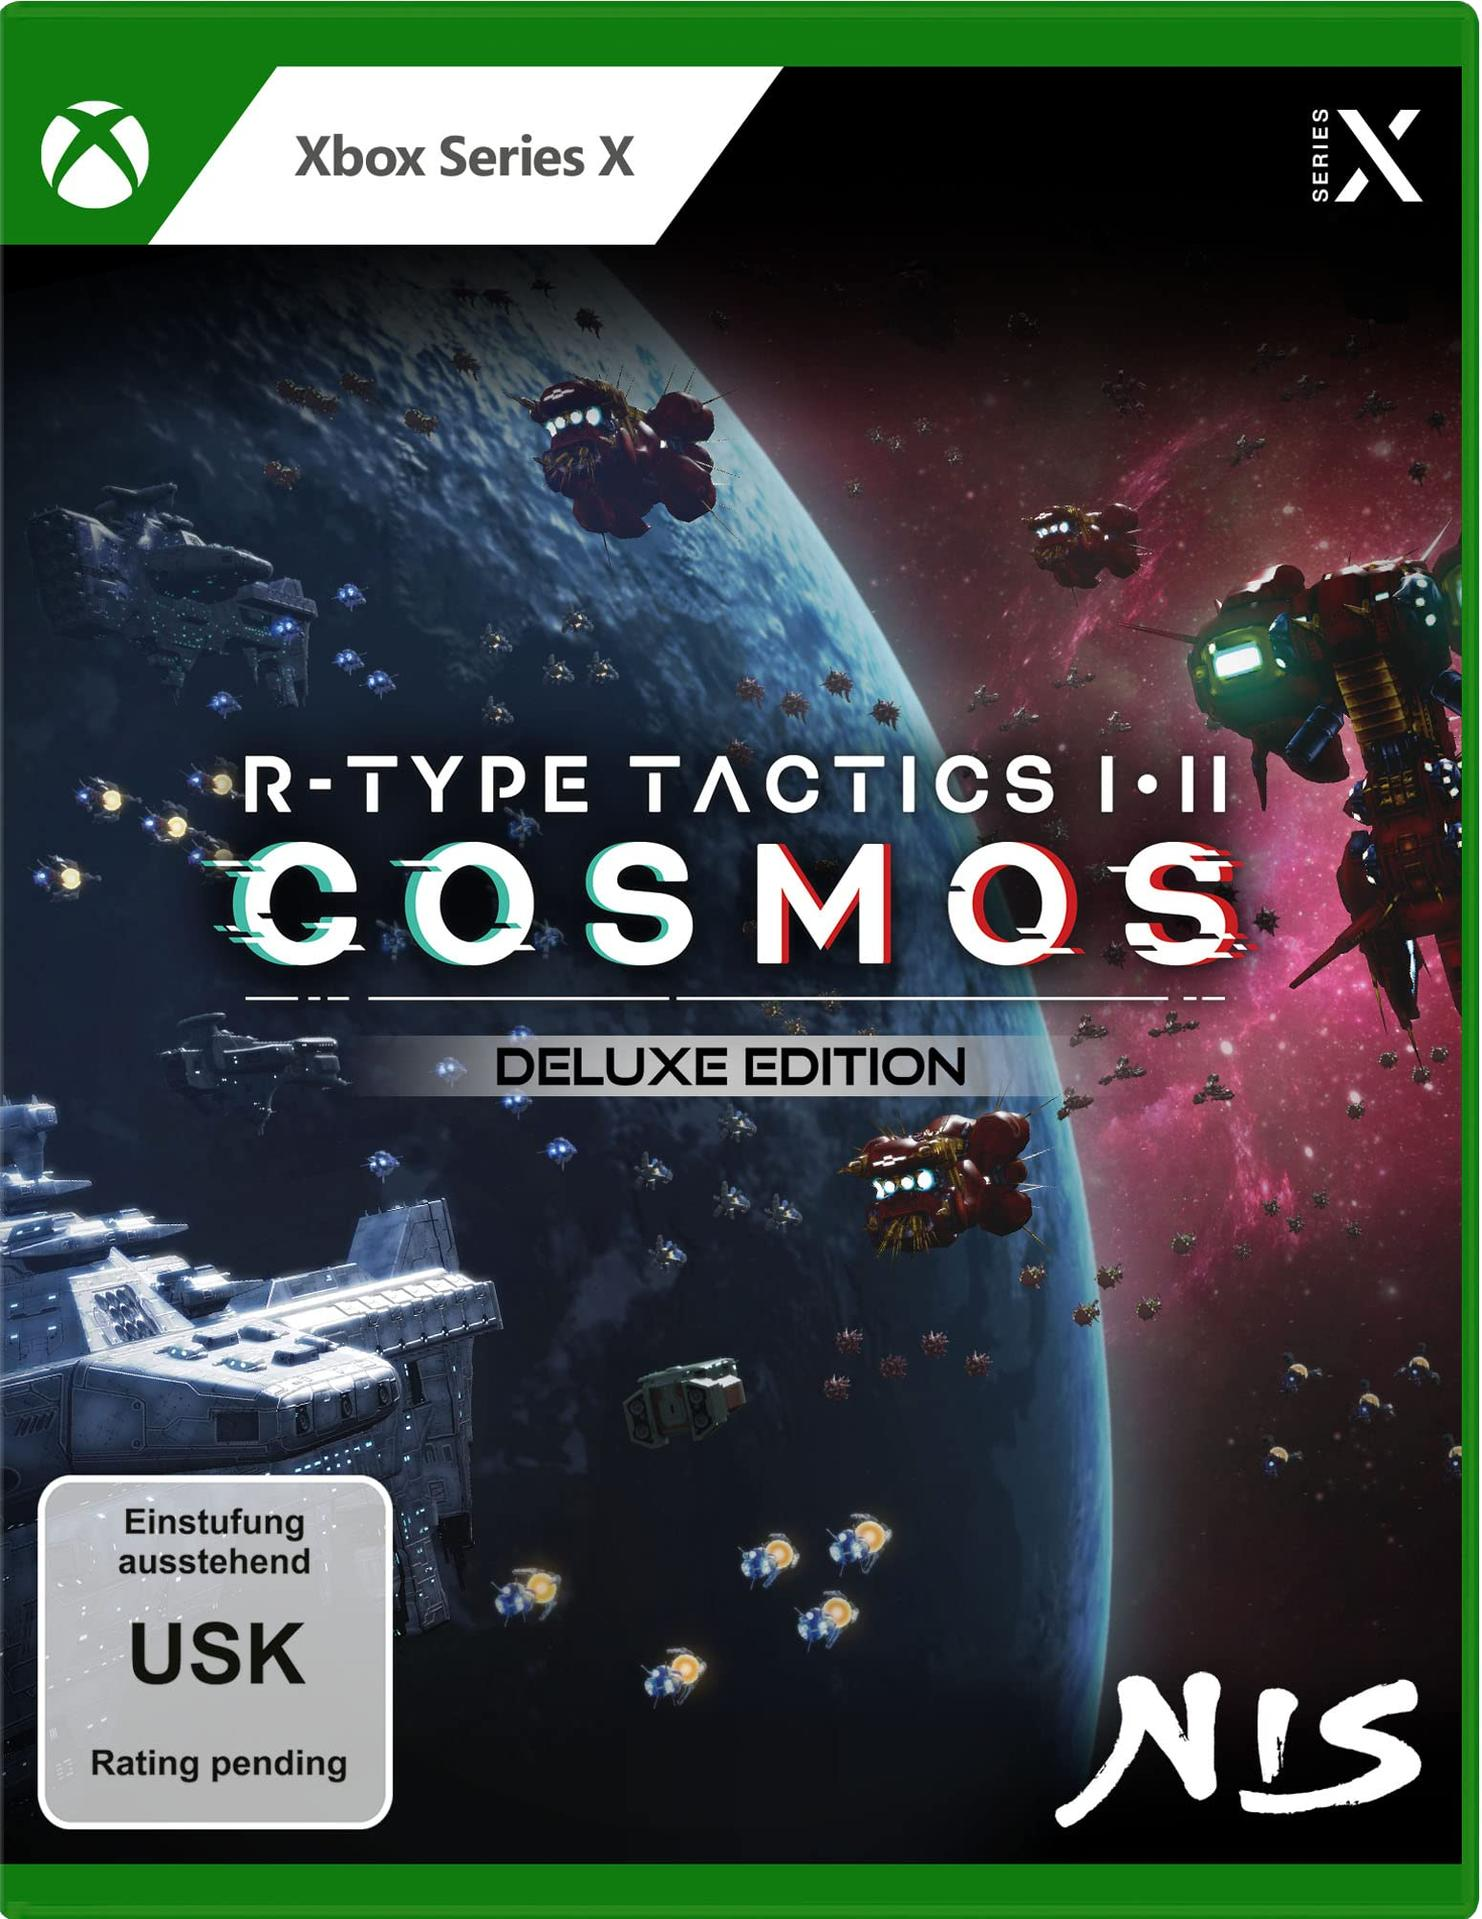 R-Type - Edition X] Series Cosmos Deluxe [Xbox Tactics 1&2